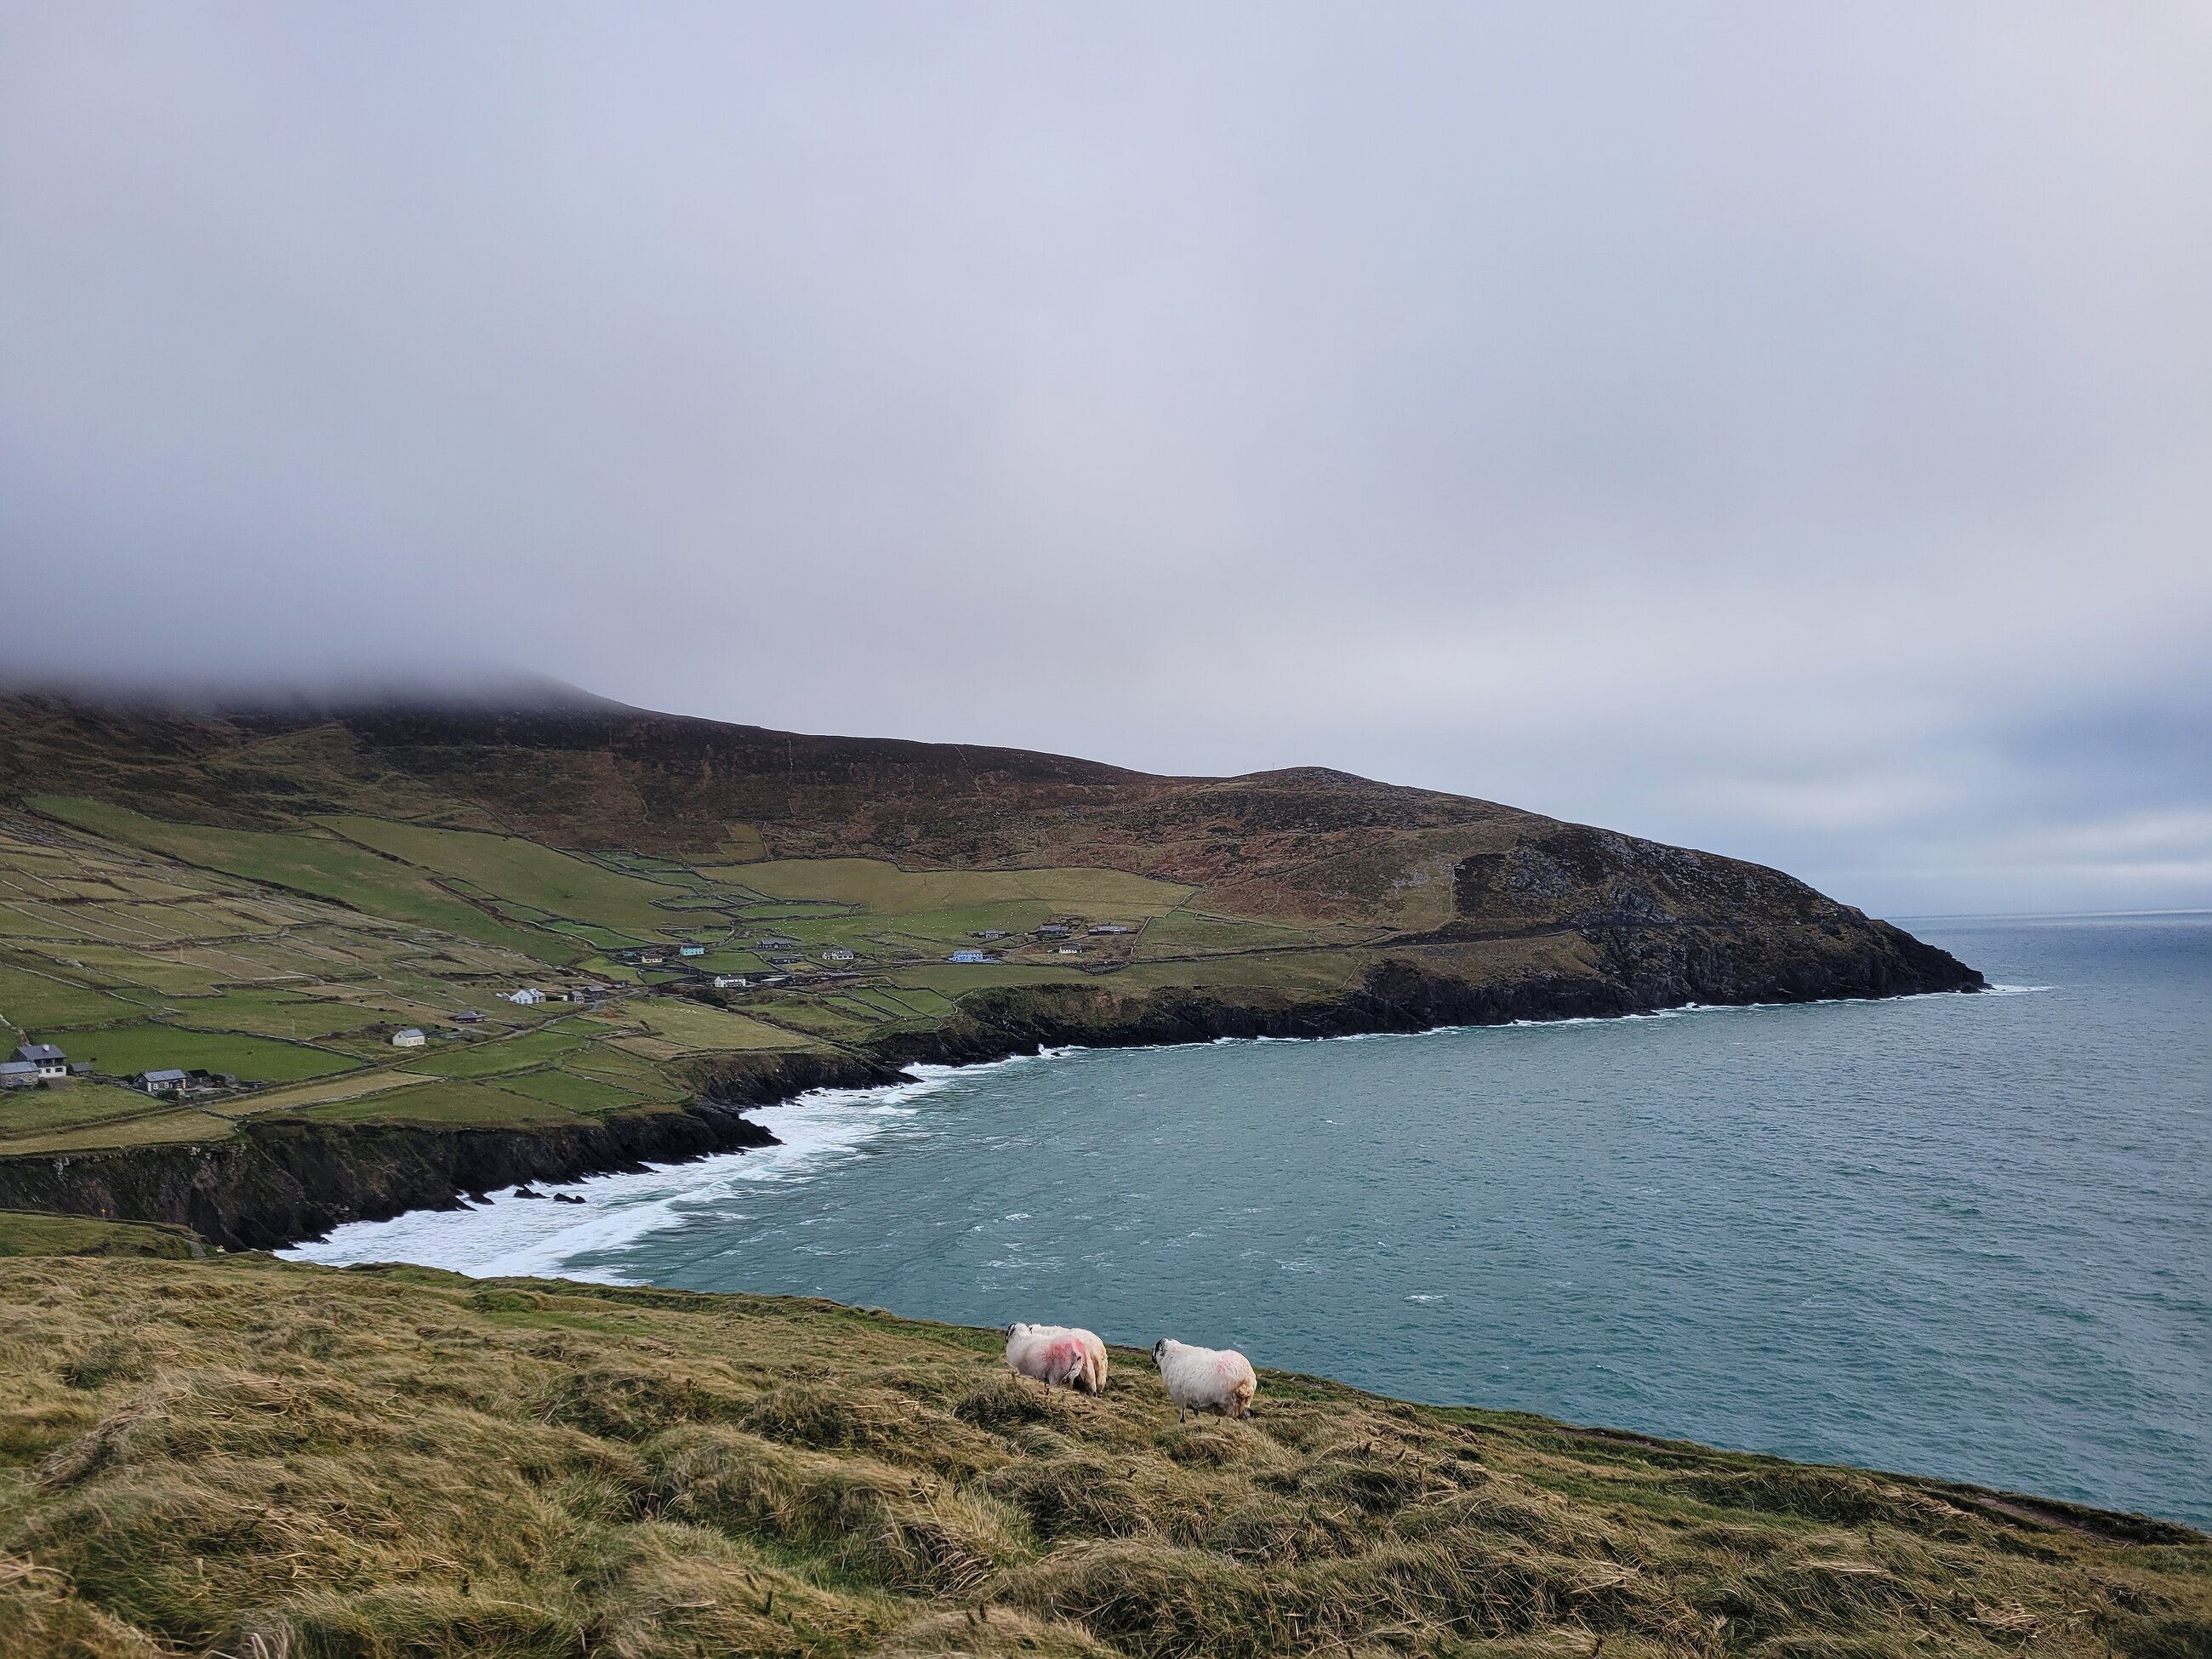 Dunmore Head, Dingle Peninsula, Co. Kerry, with sheep